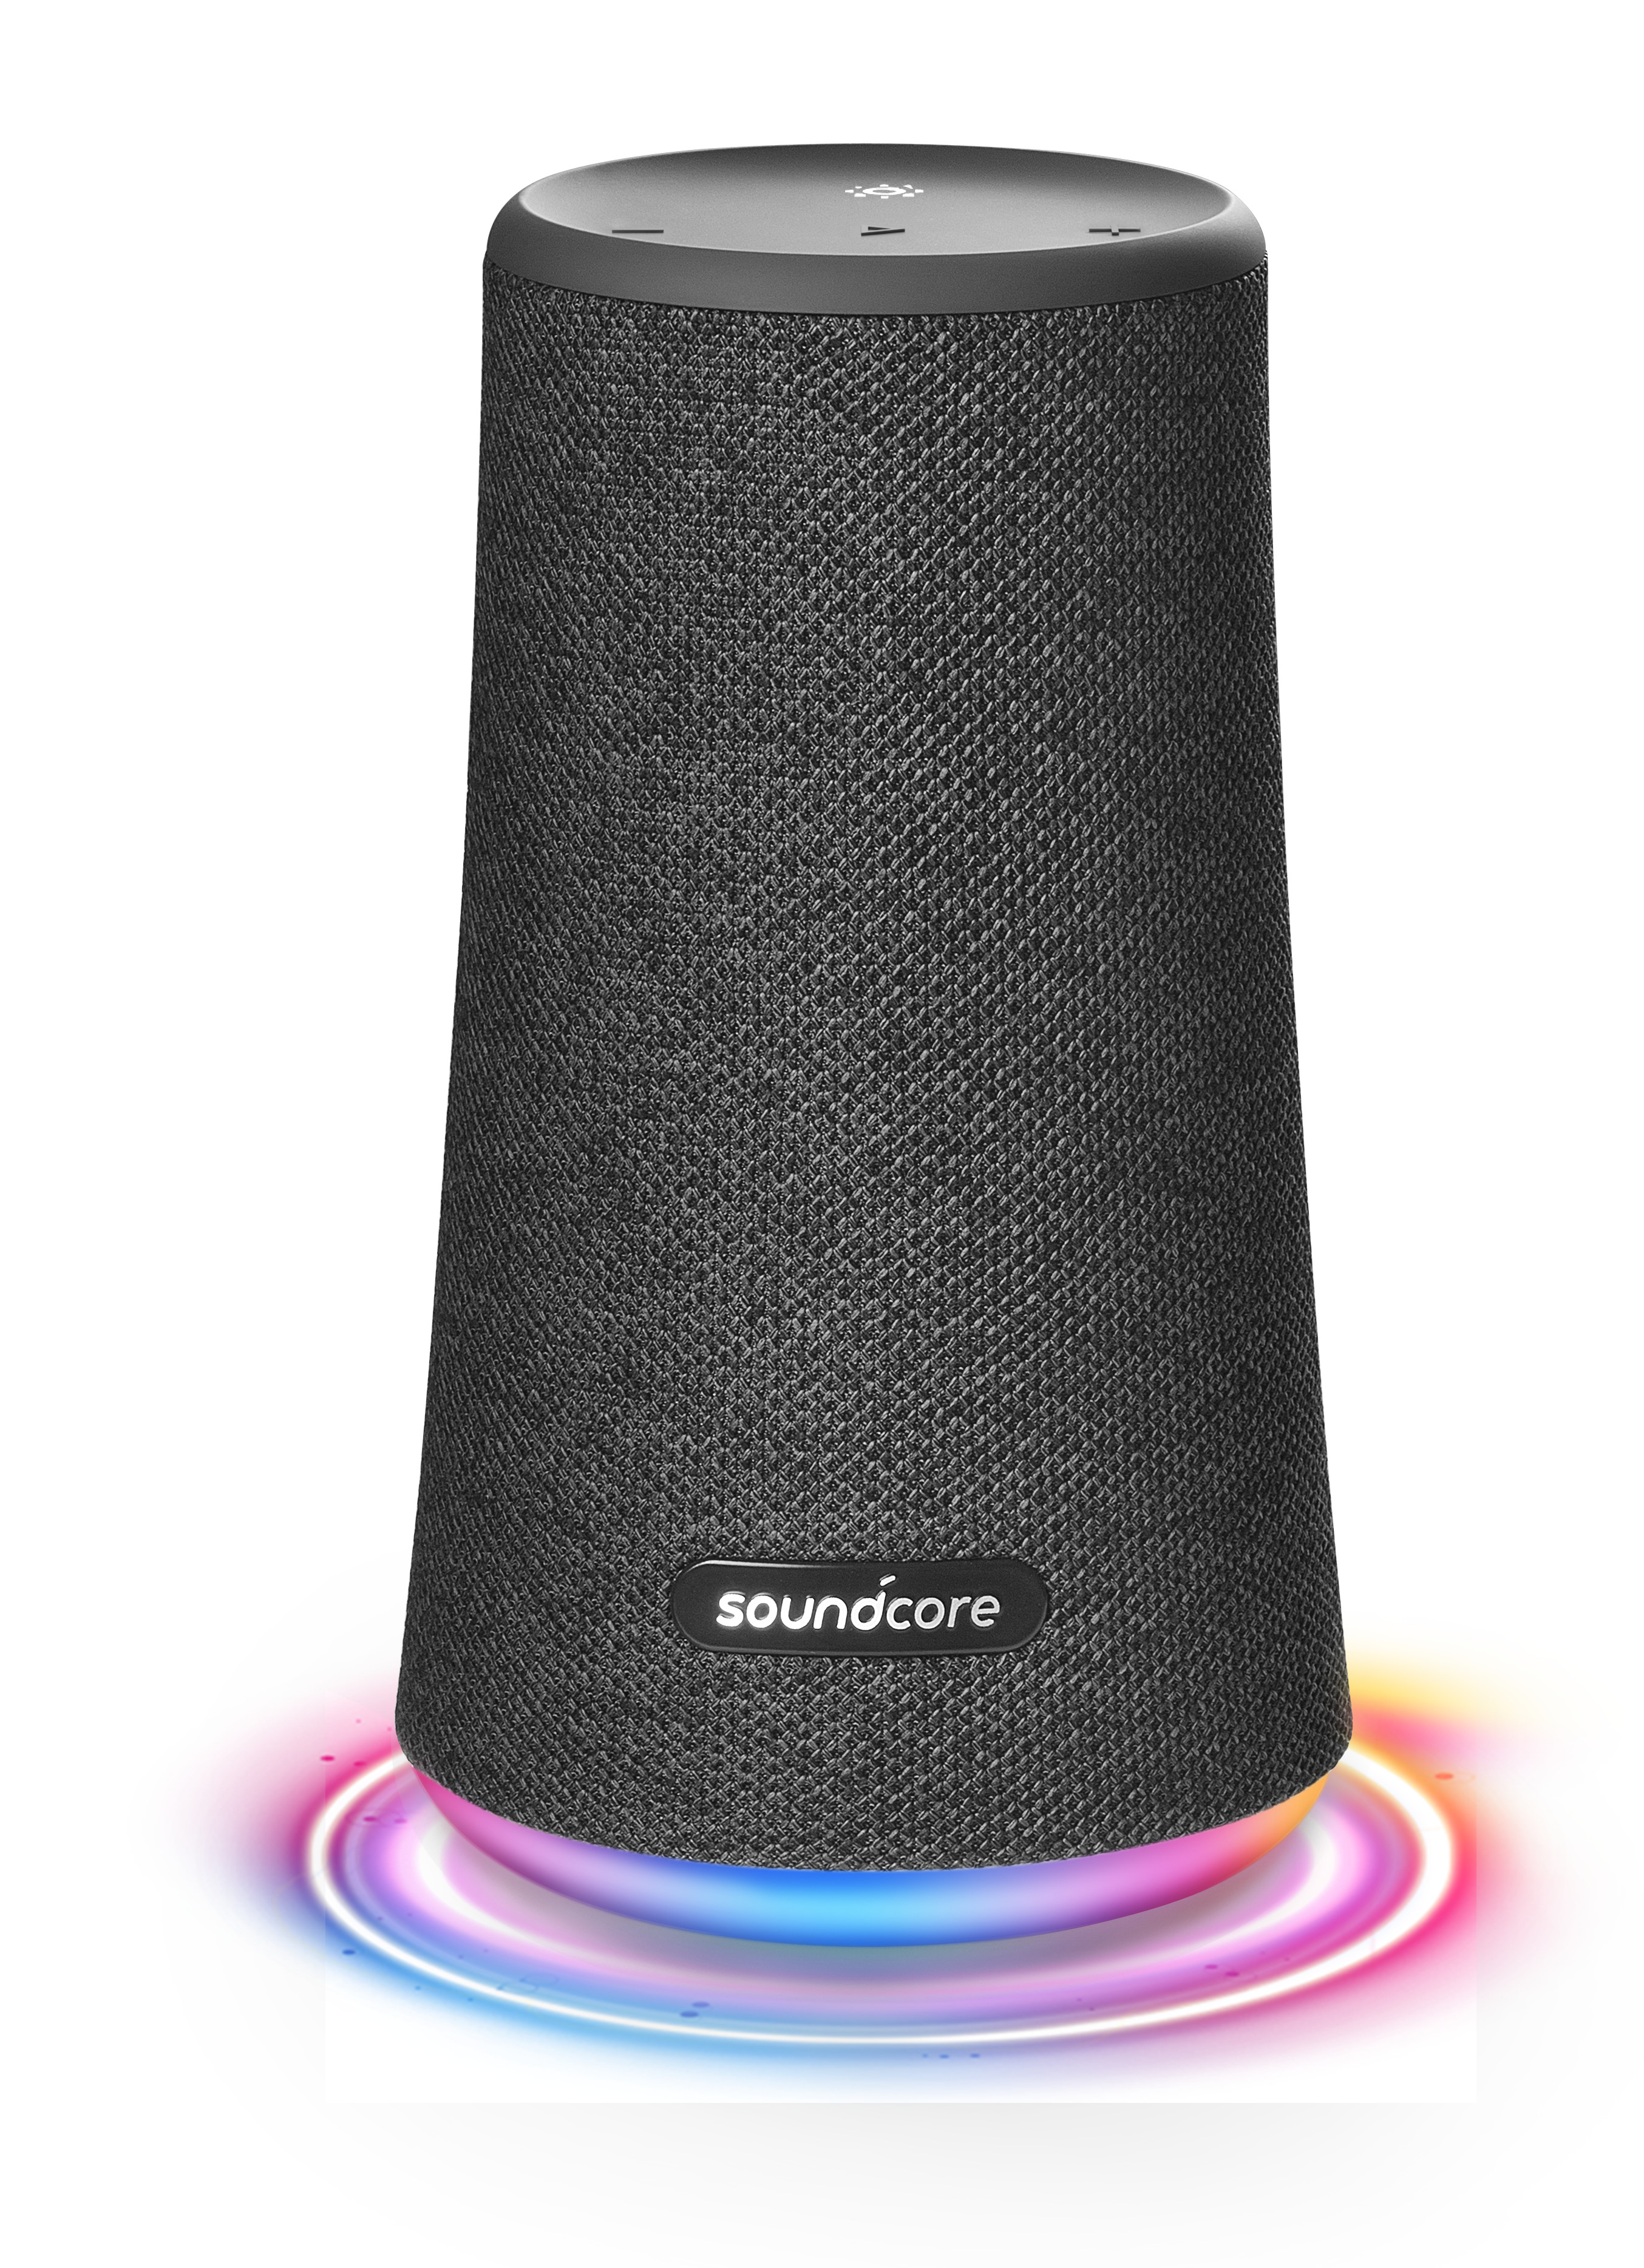 Anker Soundcore Flare + Portable Bluetooth Speaker - Black - image 1 of 6